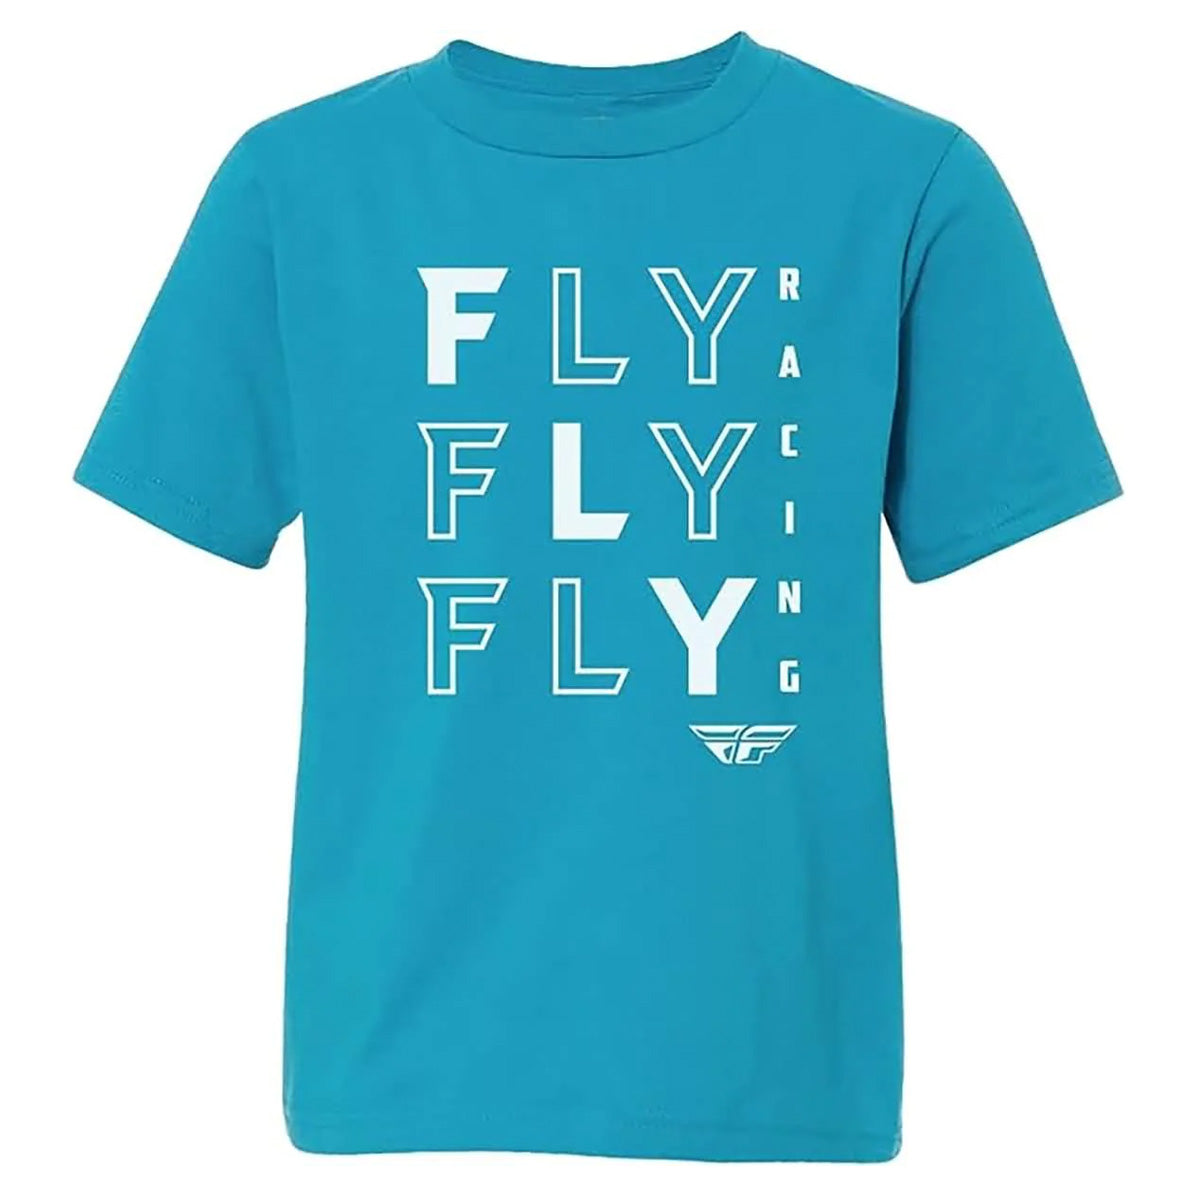 
Fly Racing Tic Tac Toe Youth Boys Short-Sleeve Shirts 